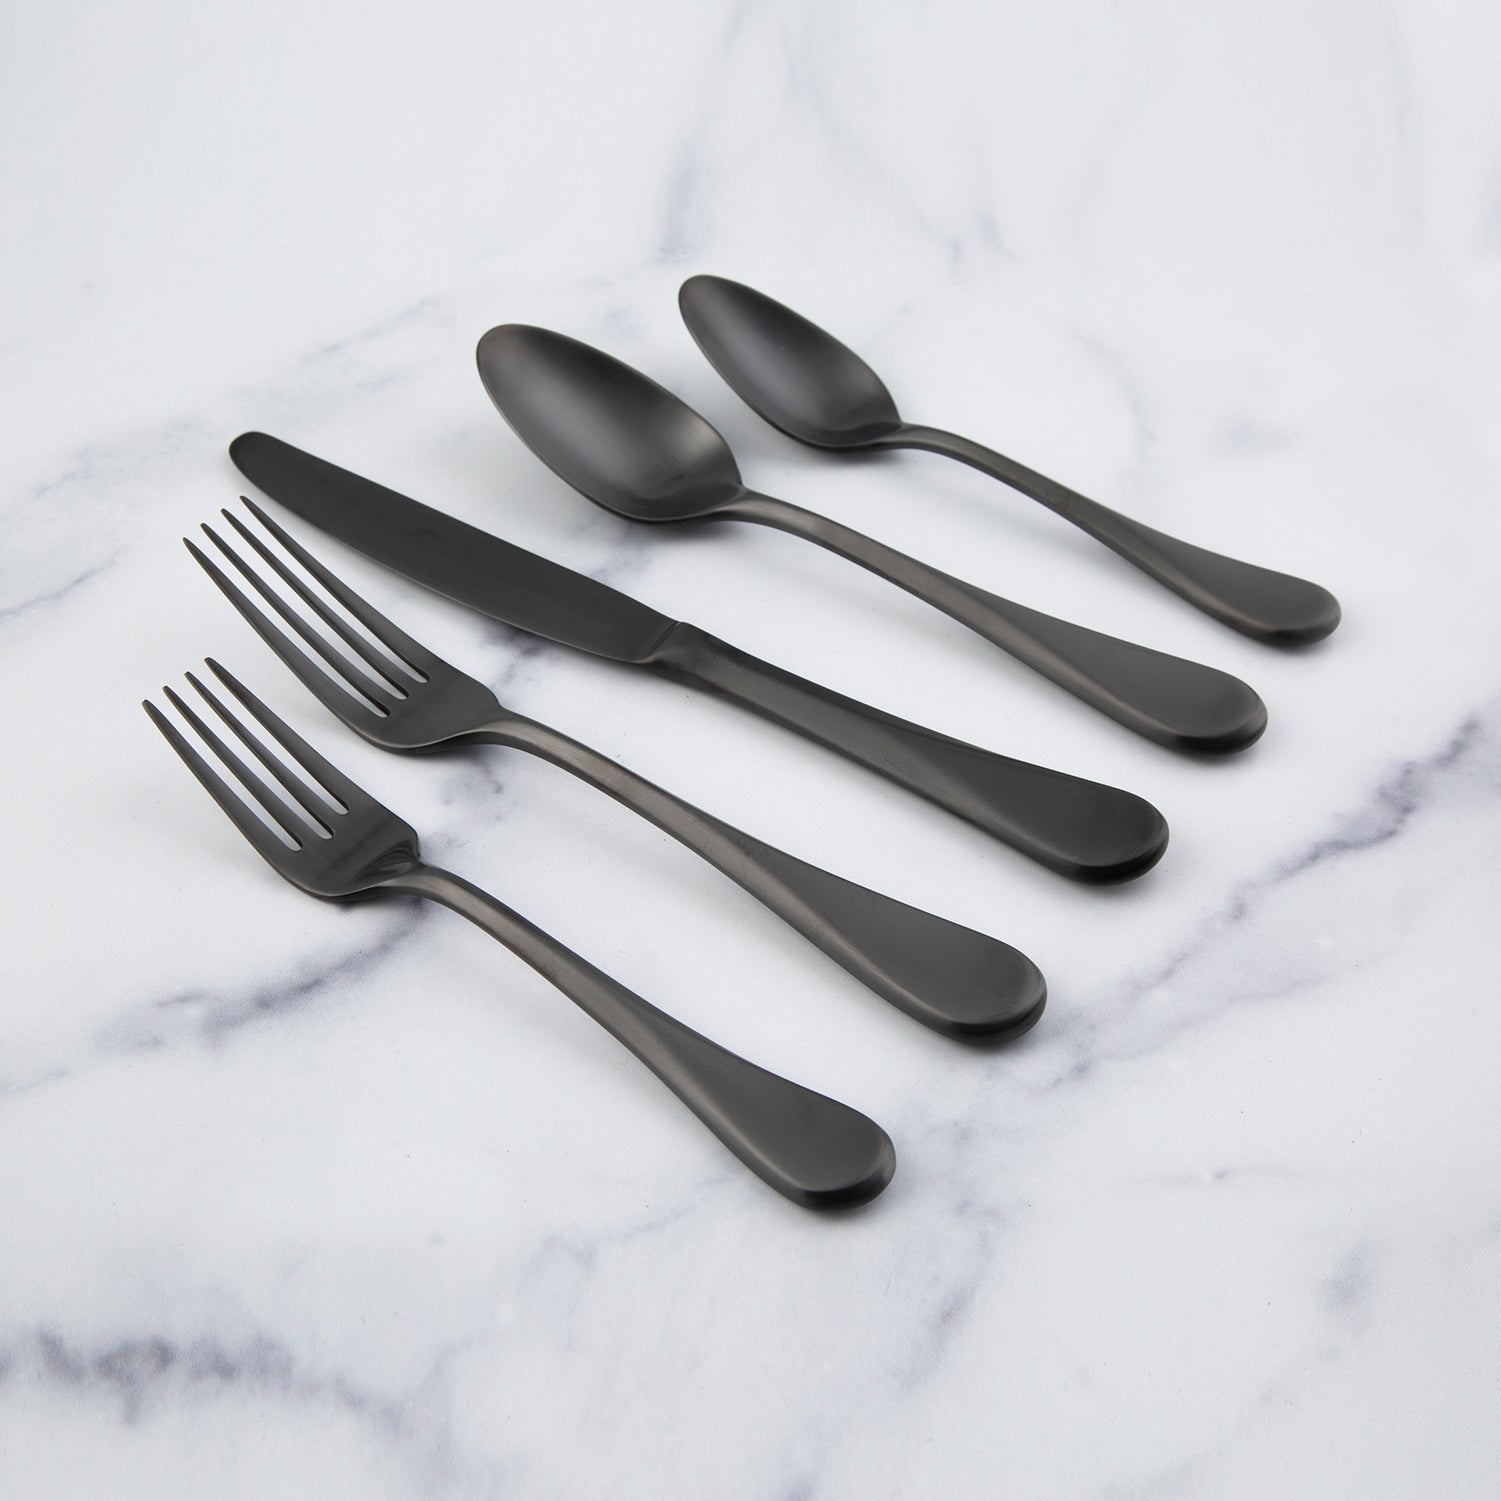 MatteBlack - Stainless Steel Matte Black Silverware Set - Cutlery